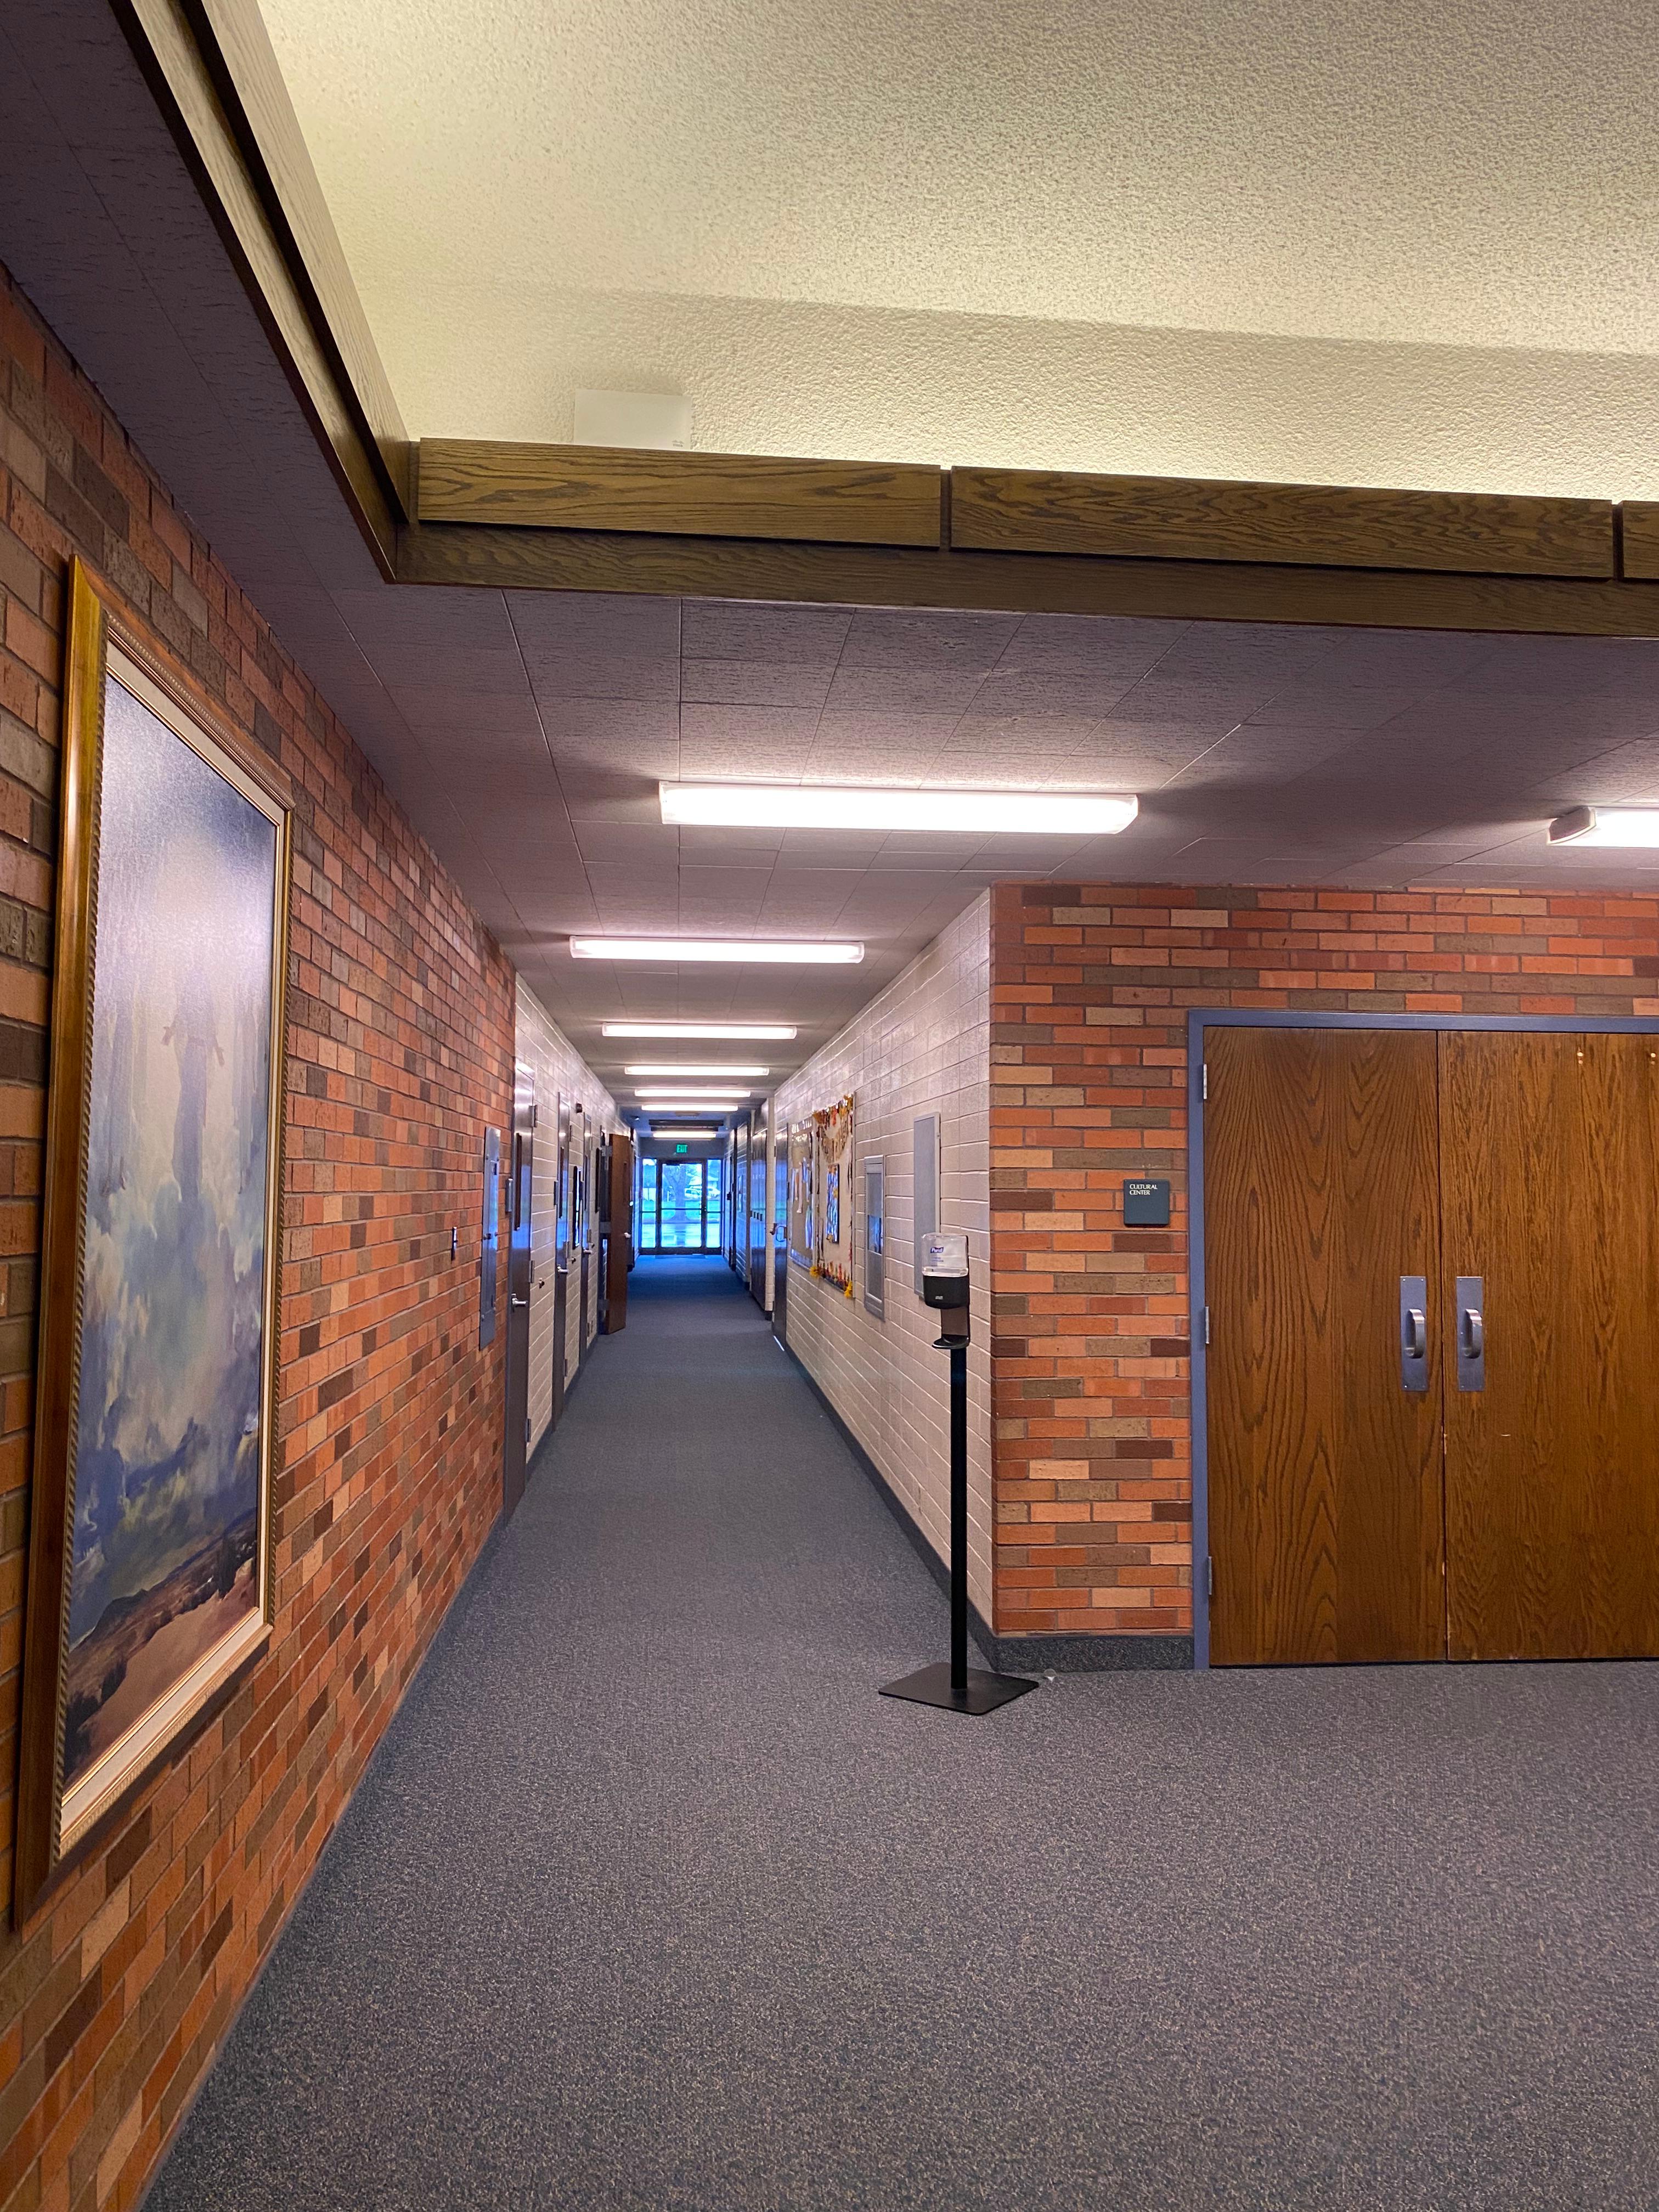 A hallways leading to classrooms, bathrooms, etc.